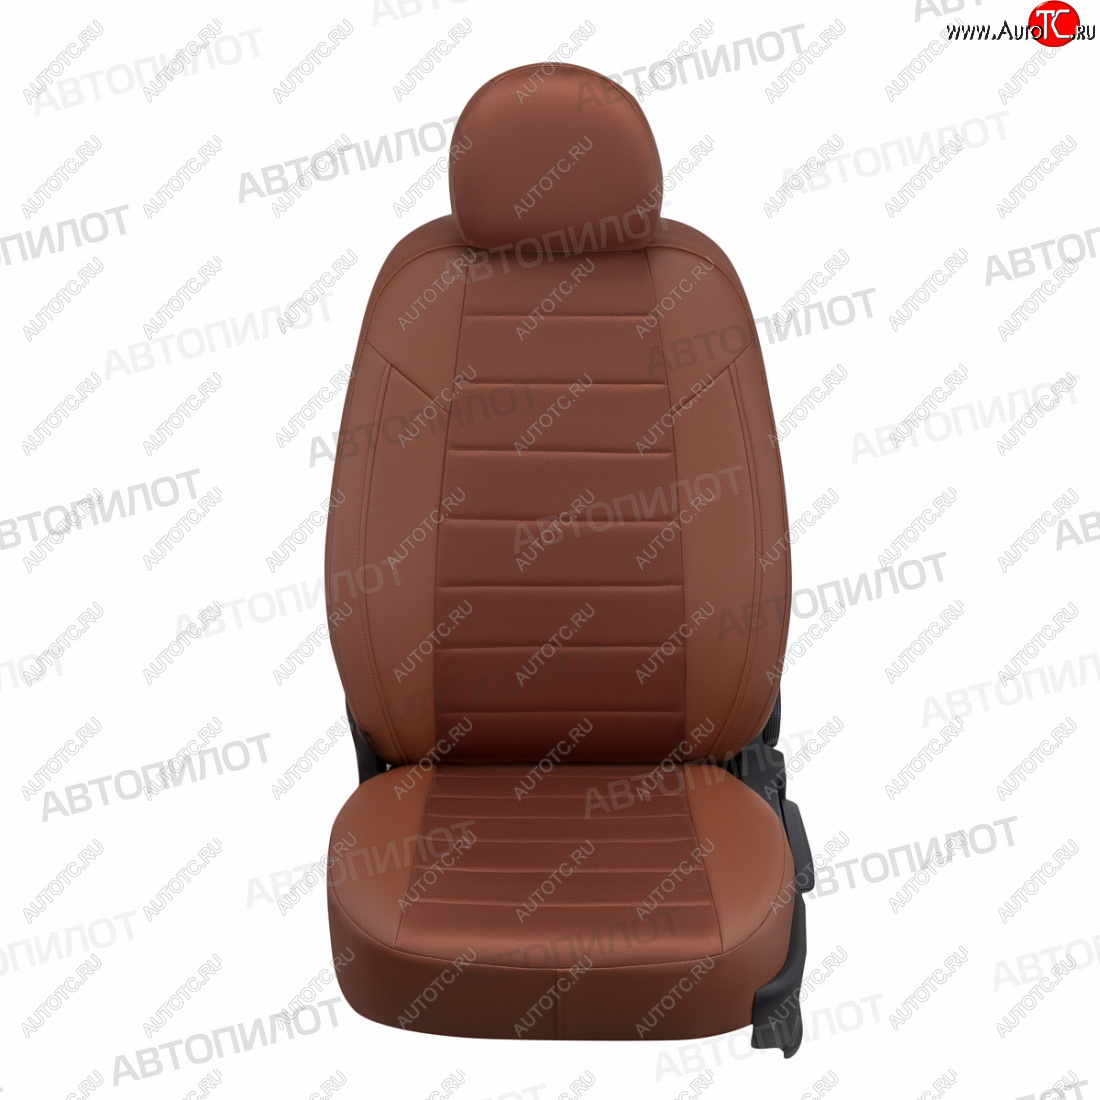 20 999 р. Чехлы сидений (экокожа/алькантара, 8 мест) Автопилот  Hyundai Staria  US4 (2021-2022) (коричневый)